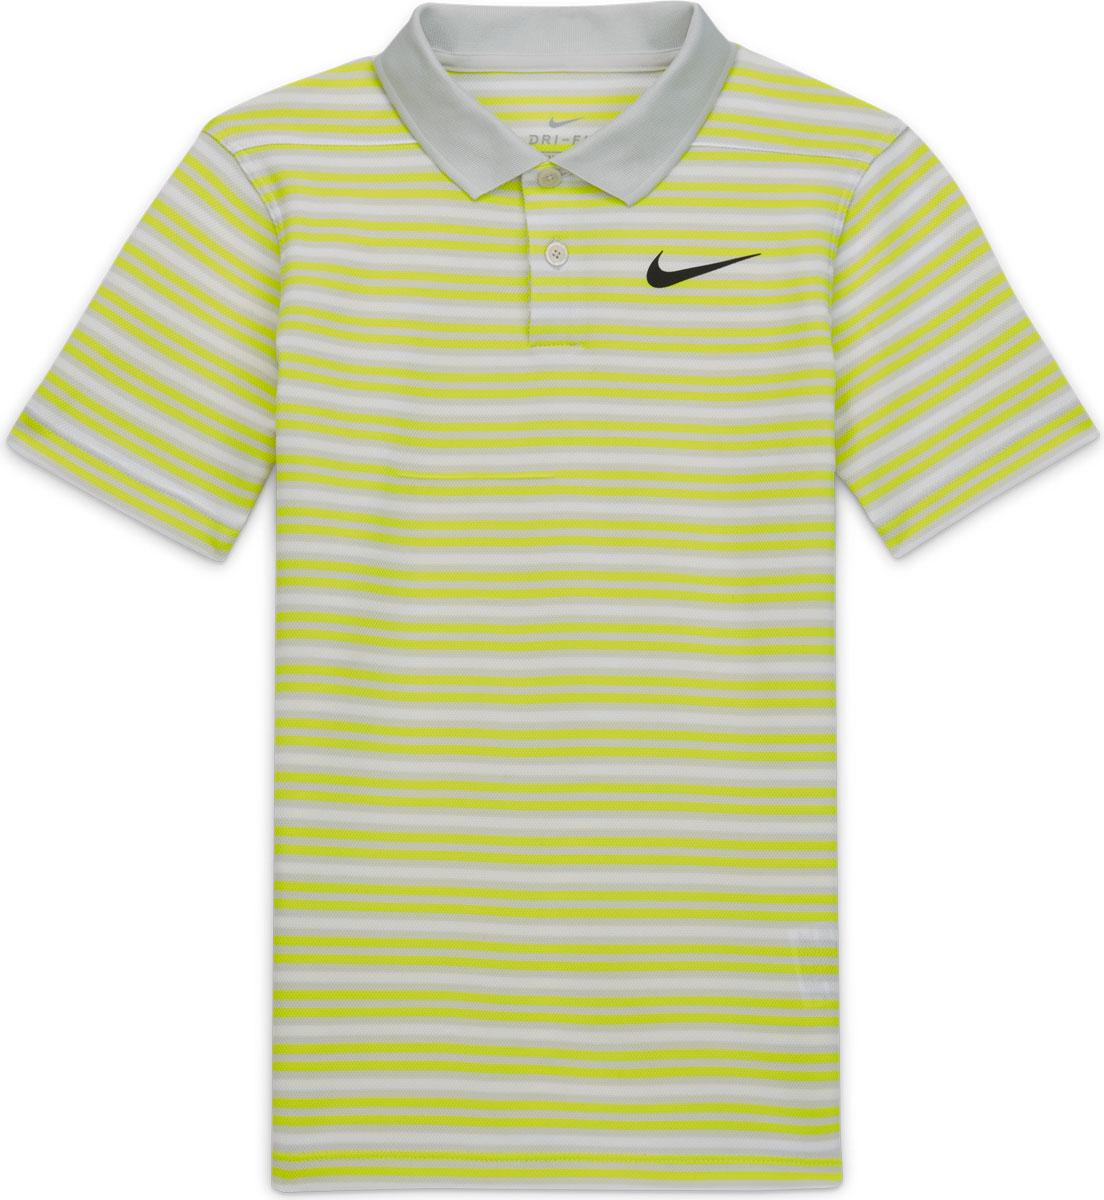 Victory Stripe Junior Golf Shirts